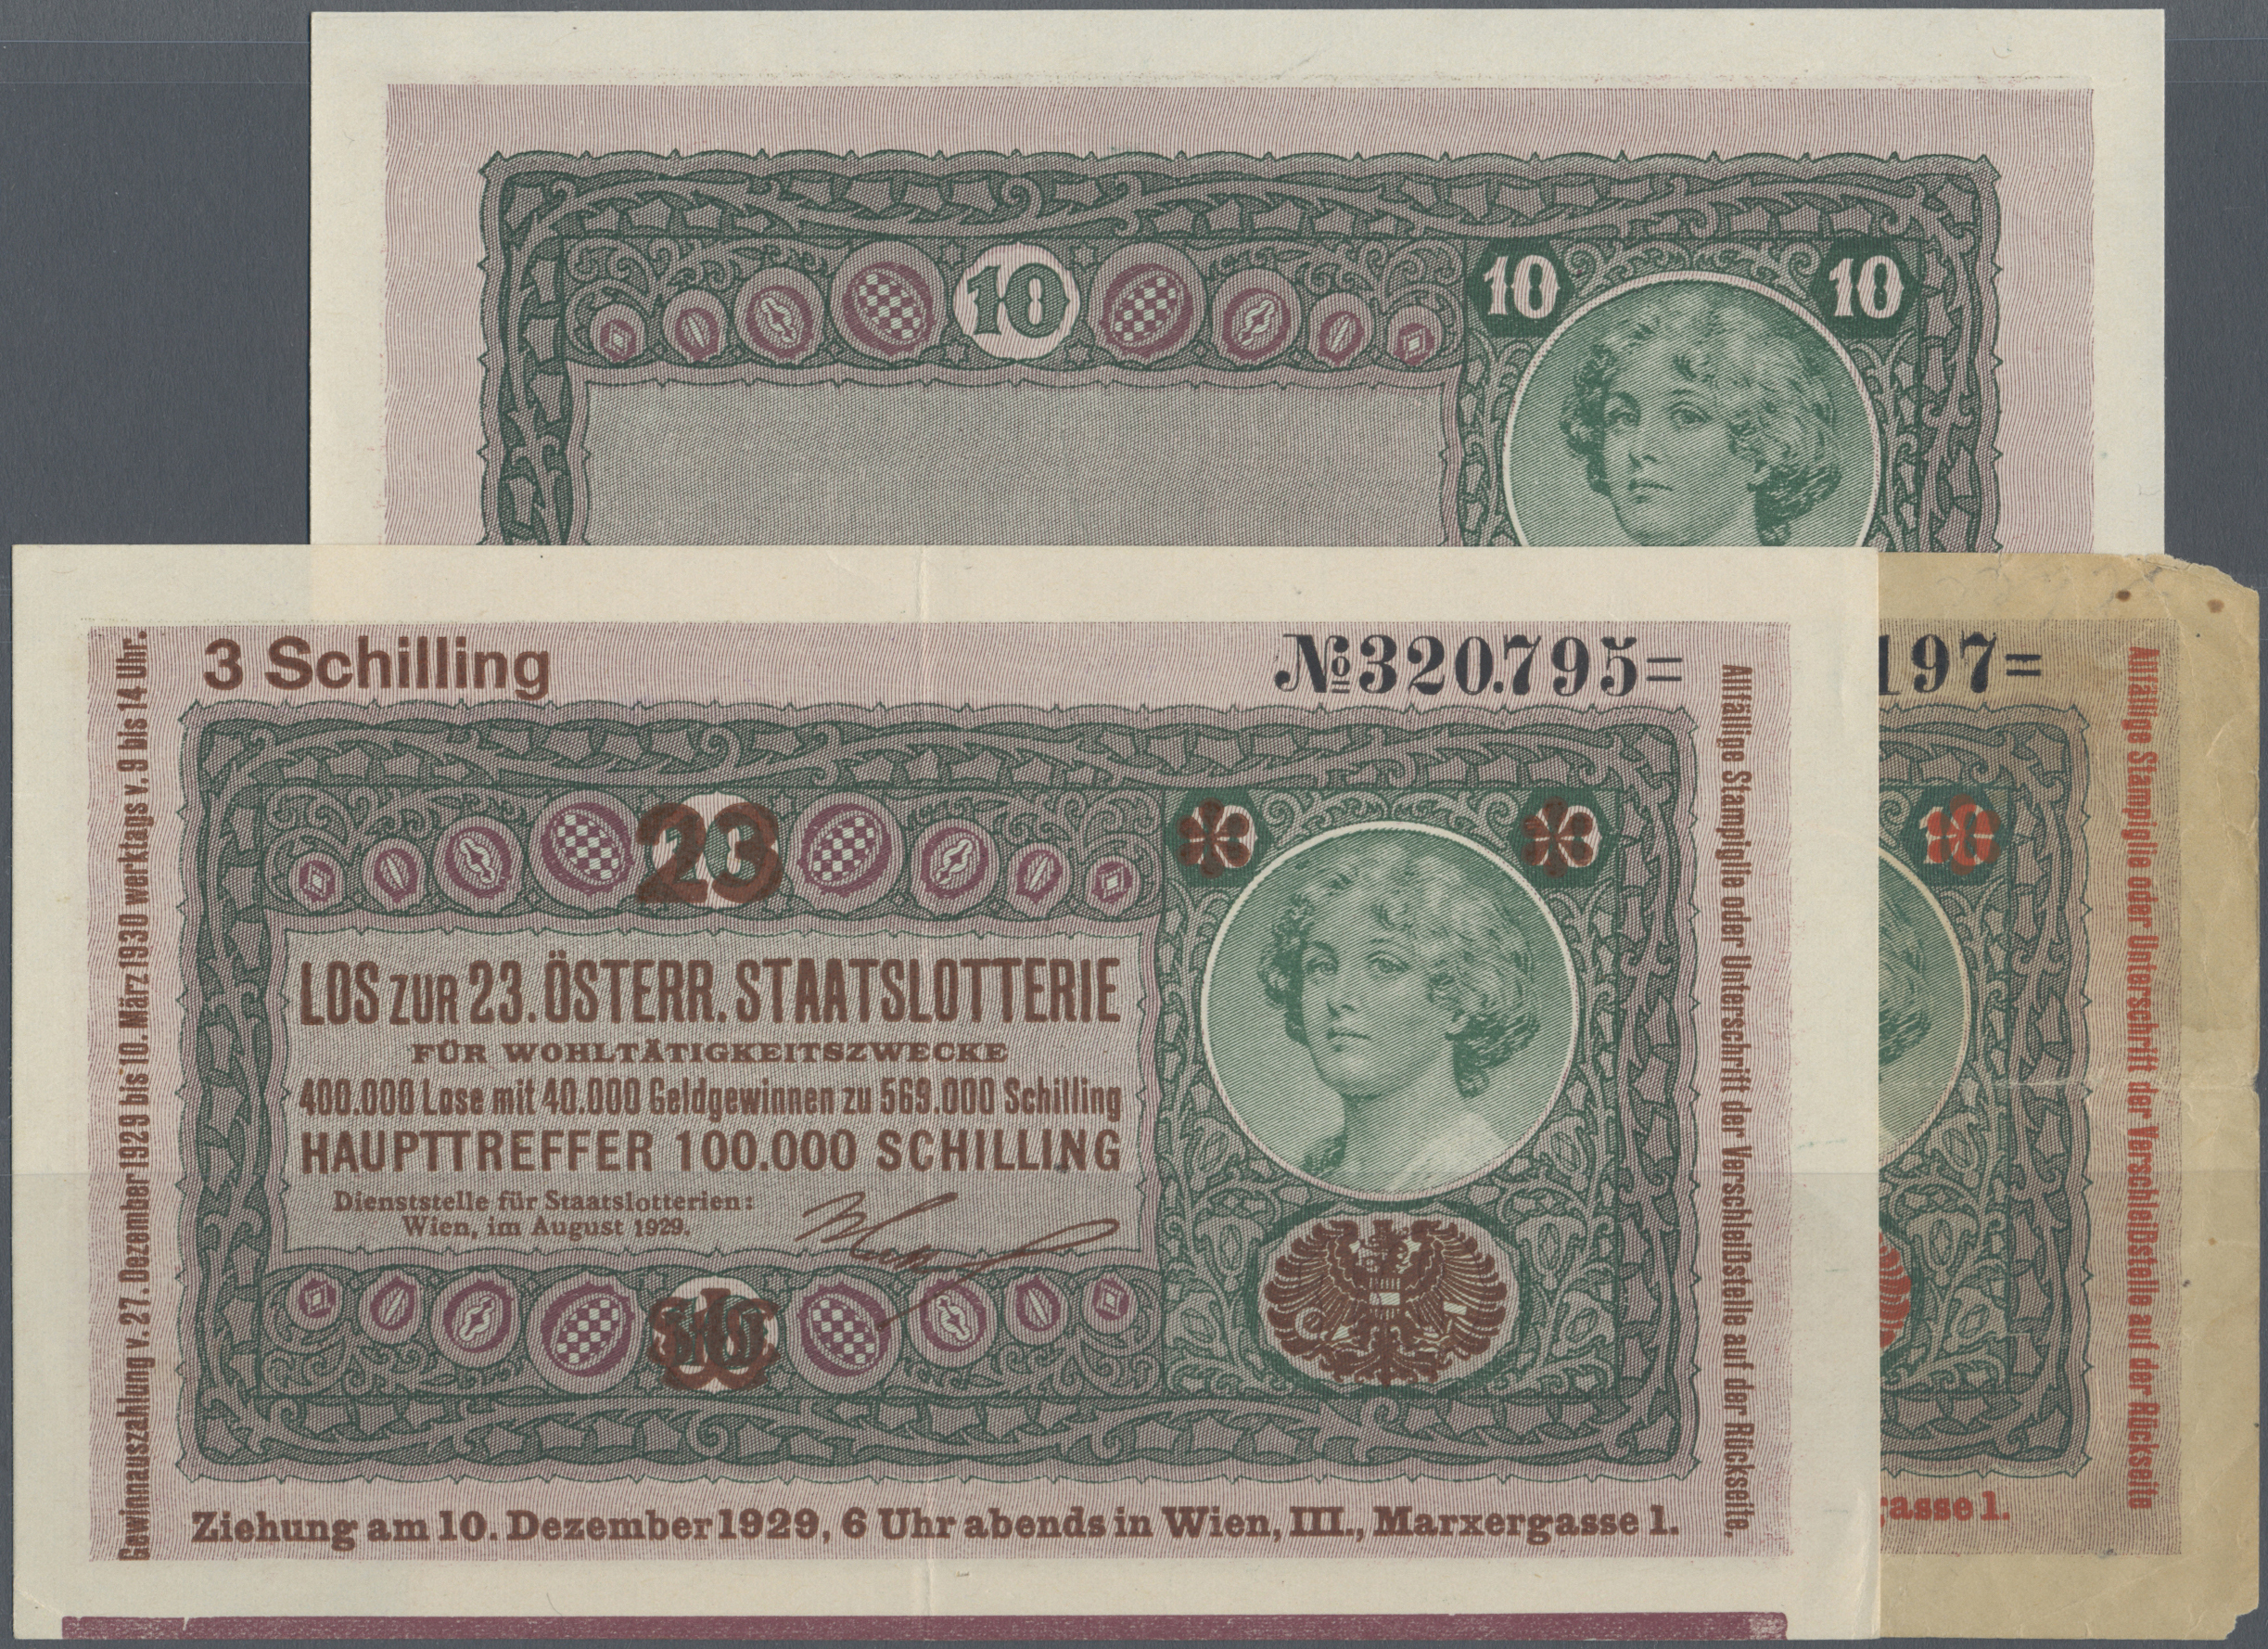 Lot 158 - Austria / Österreich | Banknoten  -  Auktionshaus Christoph Gärtner GmbH & Co. KG Bank notes Auction #42 Day 1